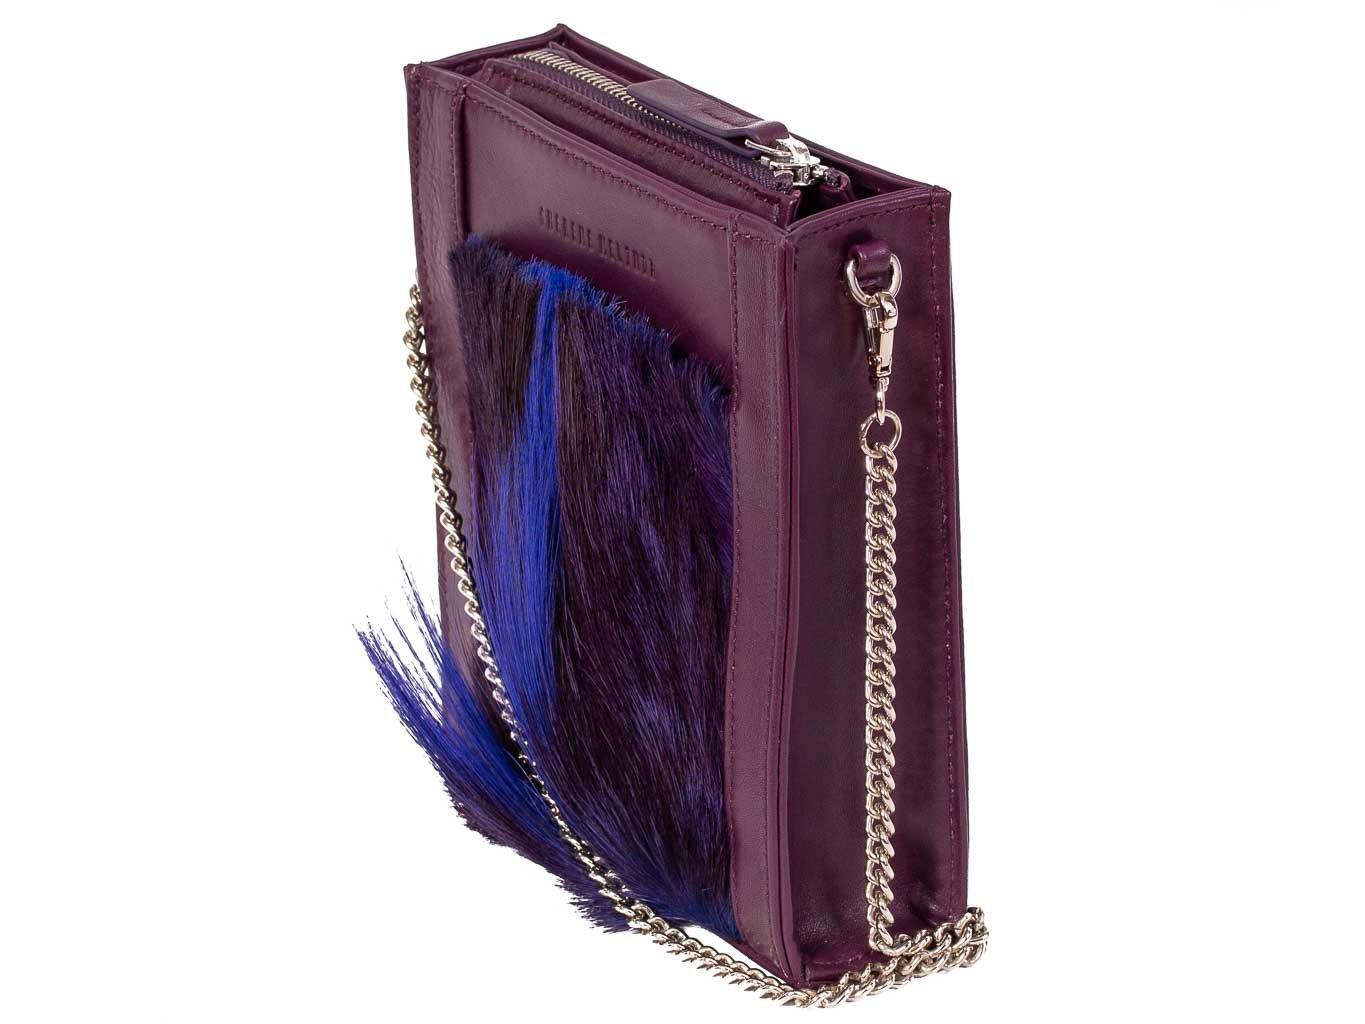 Messenger Springbok Handbag in Deep Purple with a fan feature by Sherene Melinda side angle